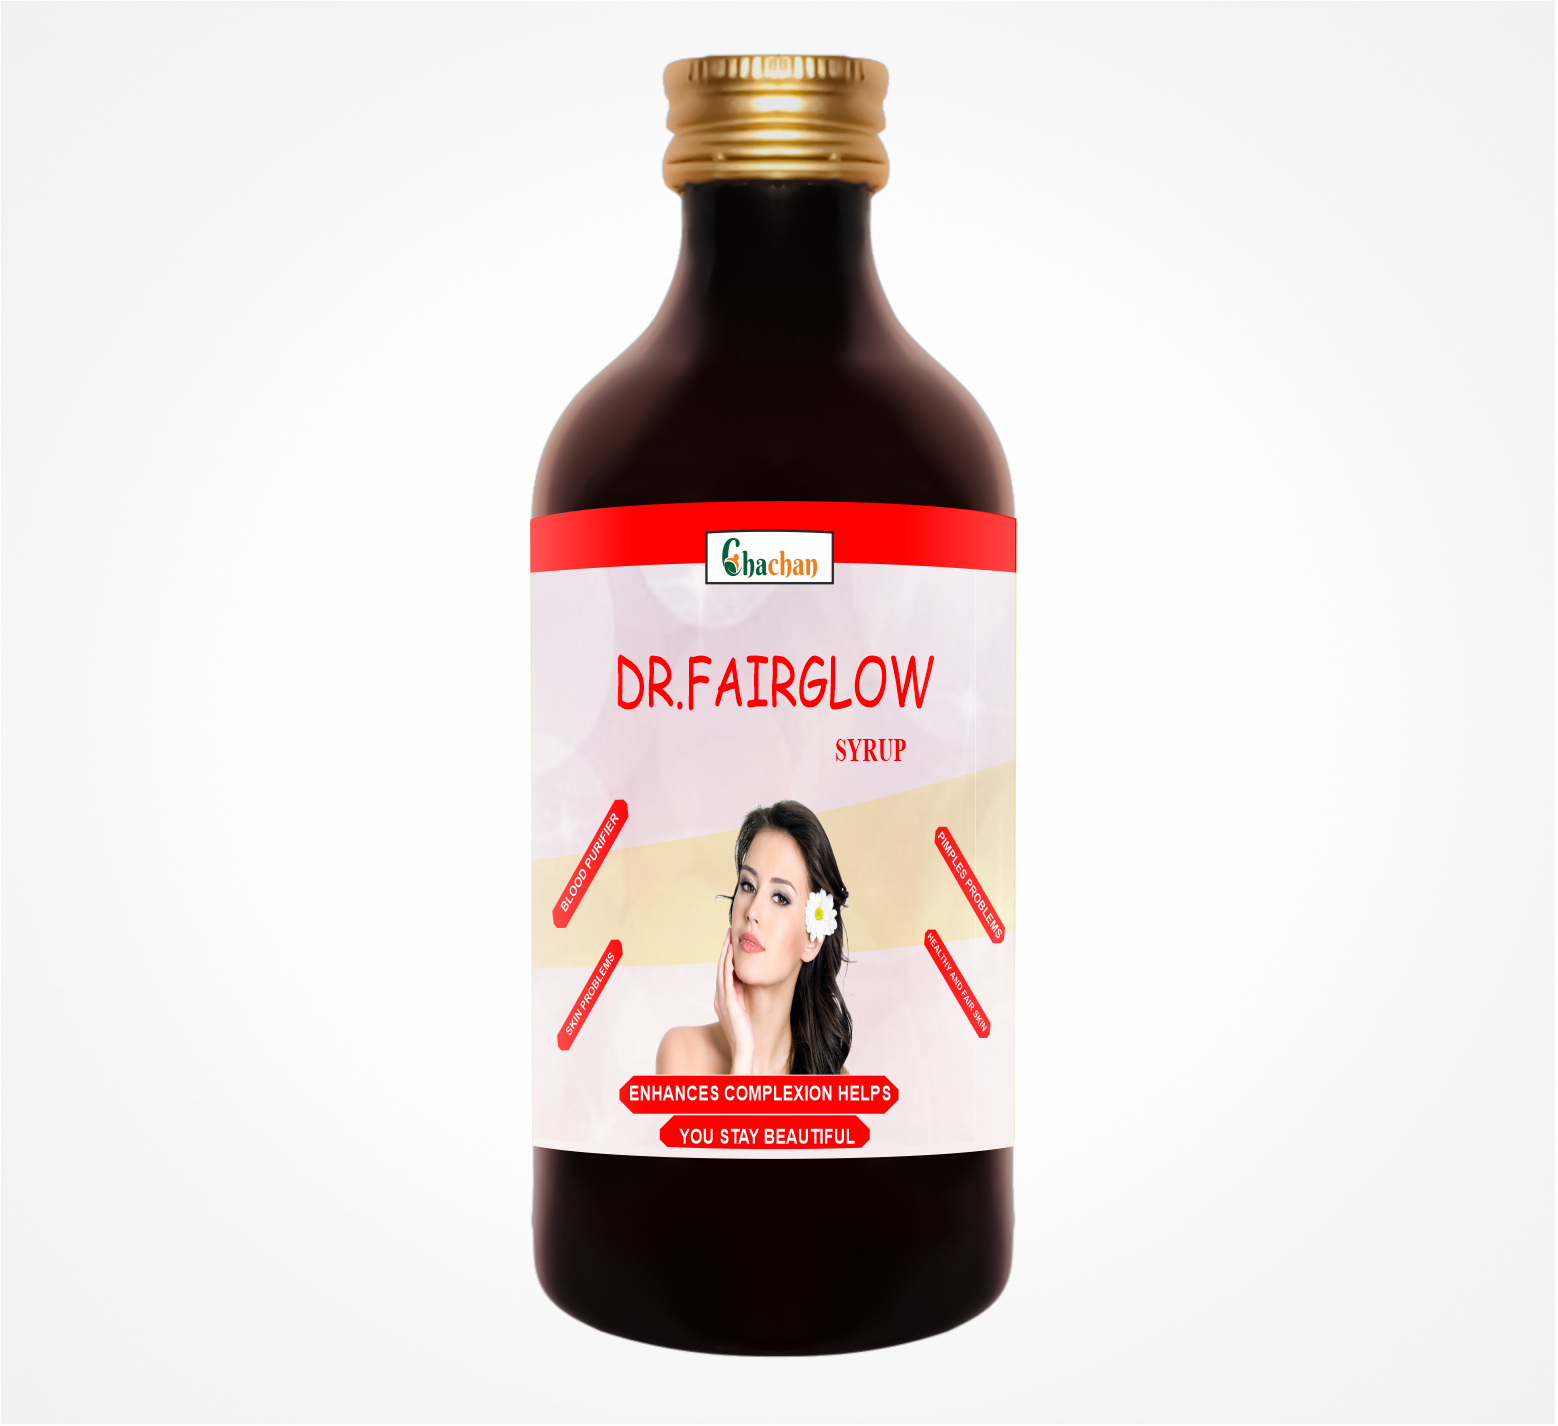 Chachan Dr. Fair Glow Syrup